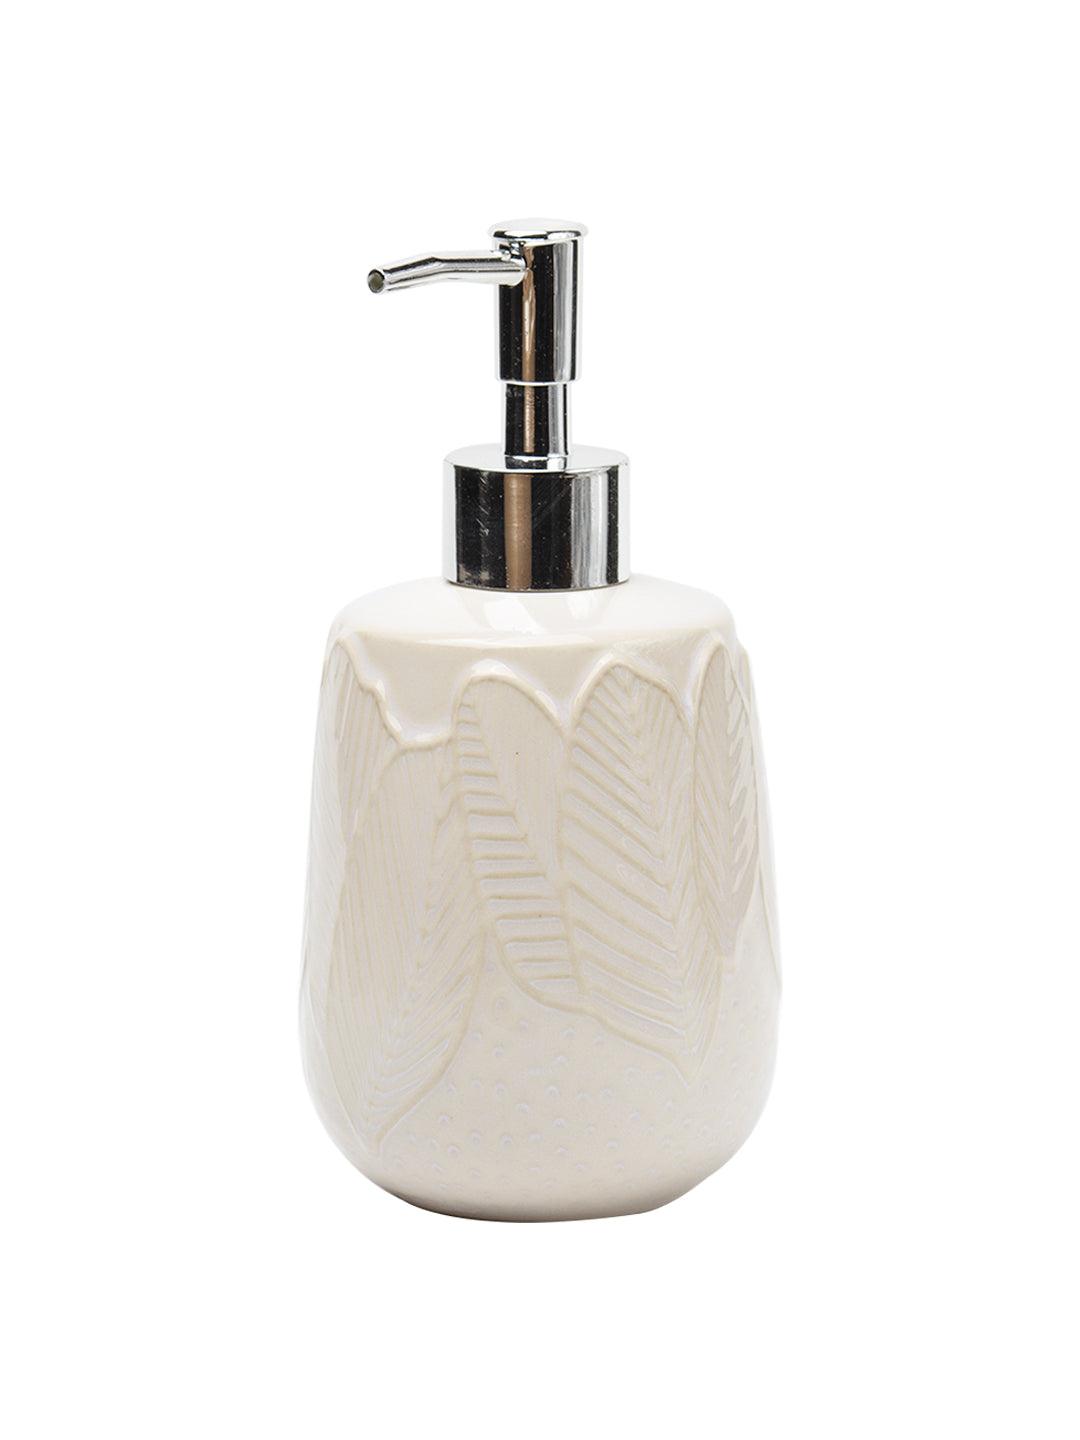 Off White Ceramic Bathroom Set Of 4 - Leafy Pattern, Bath Accessories - MARKET 99